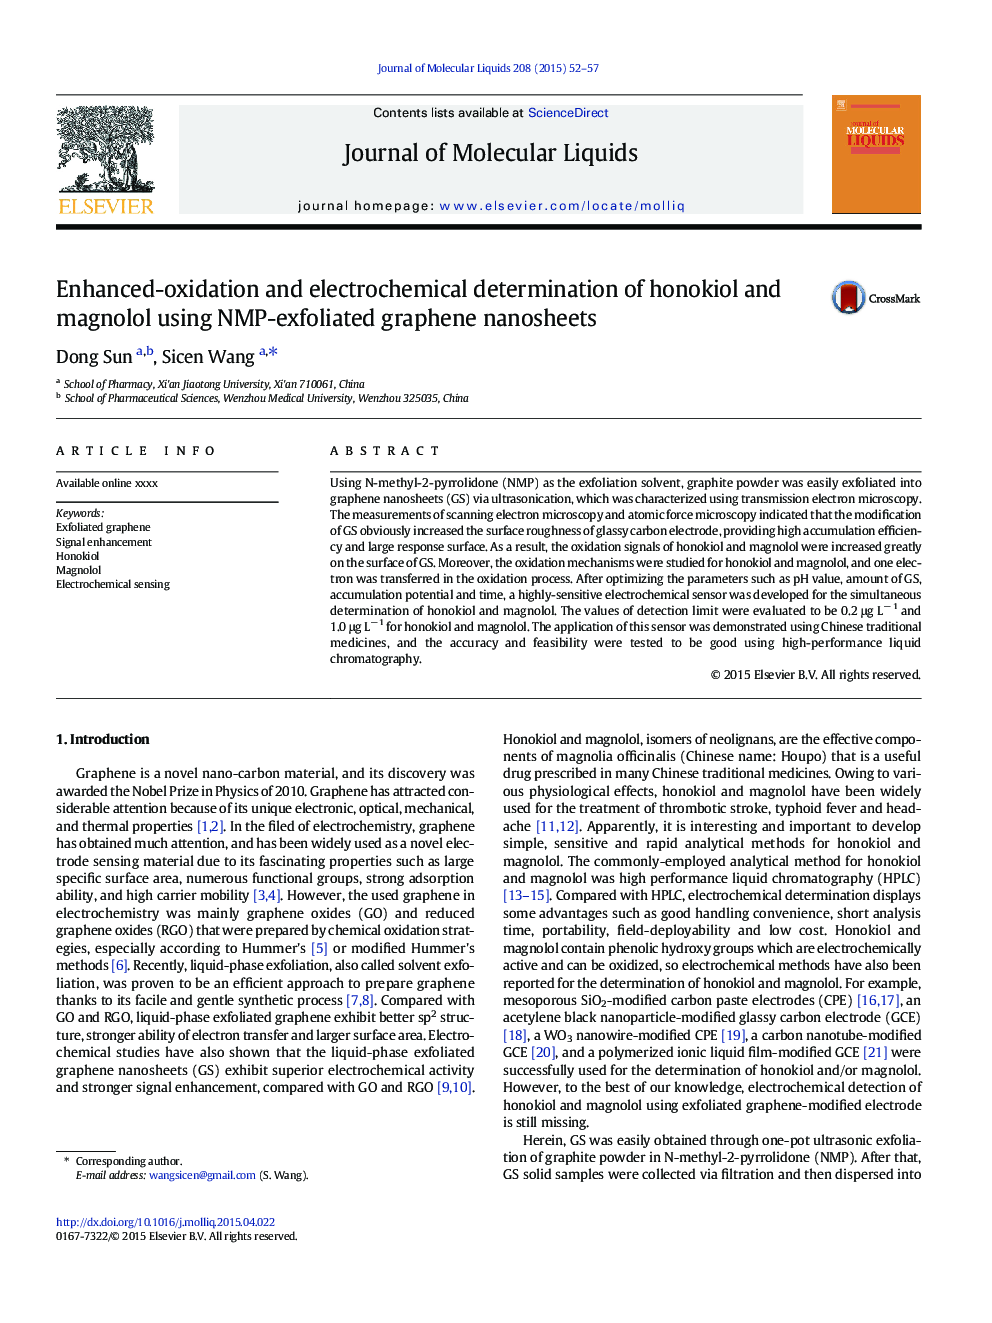 Enhanced-oxidation and electrochemical determination of honokiol and magnolol using NMP-exfoliated graphene nanosheets